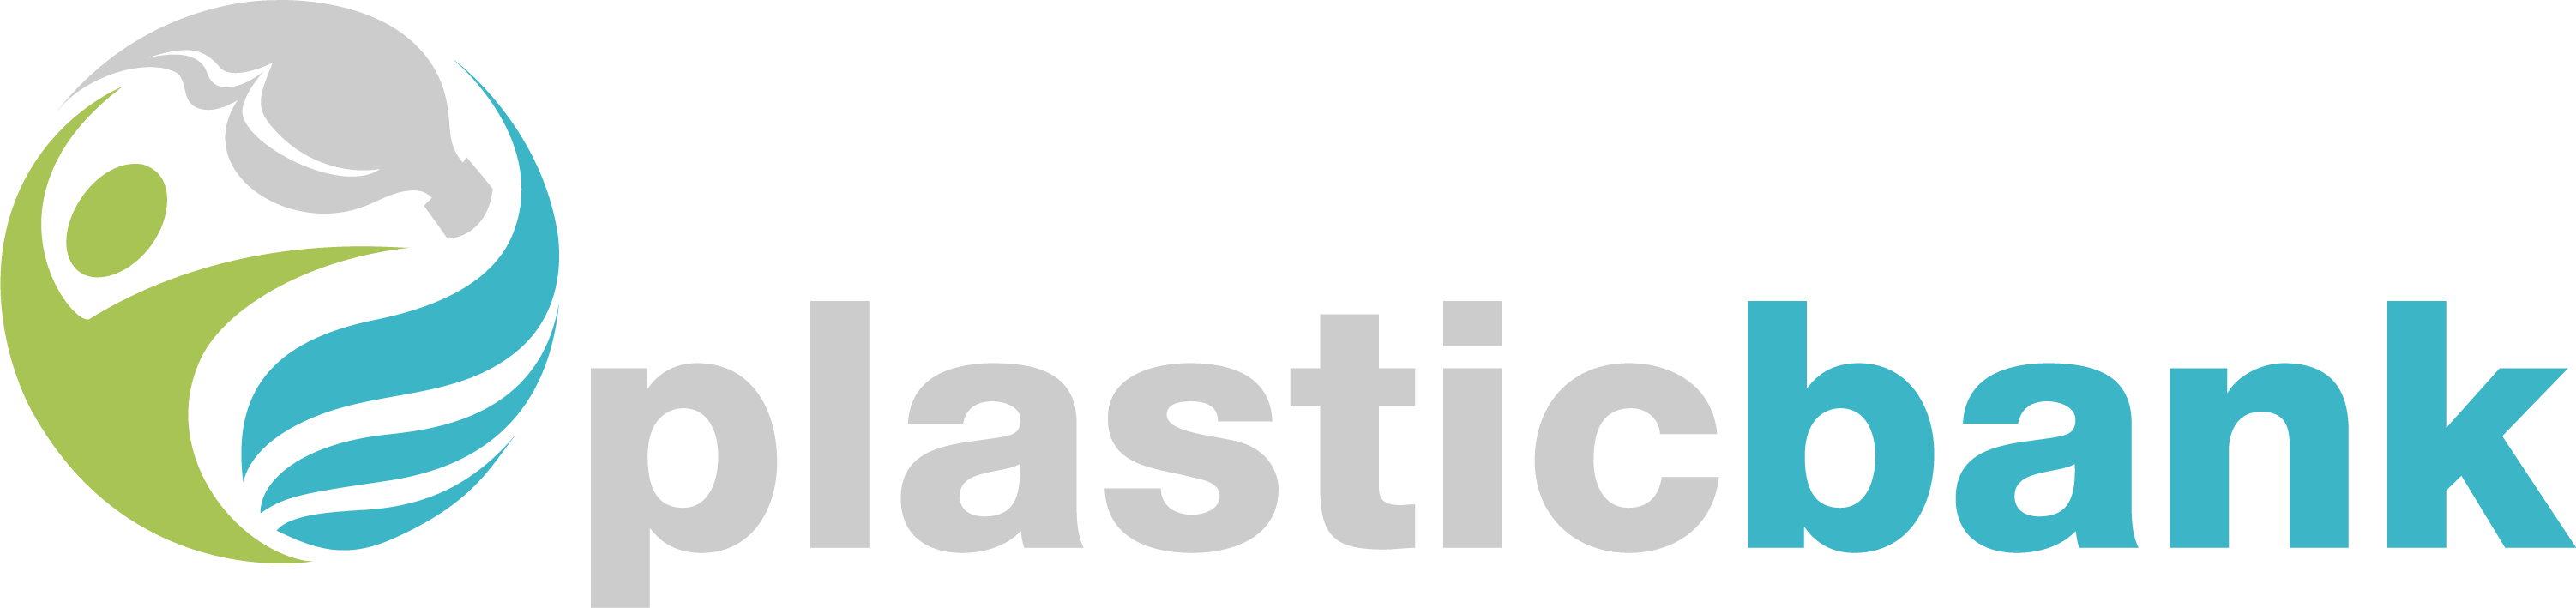 PlasticBank-logo-png-transparent